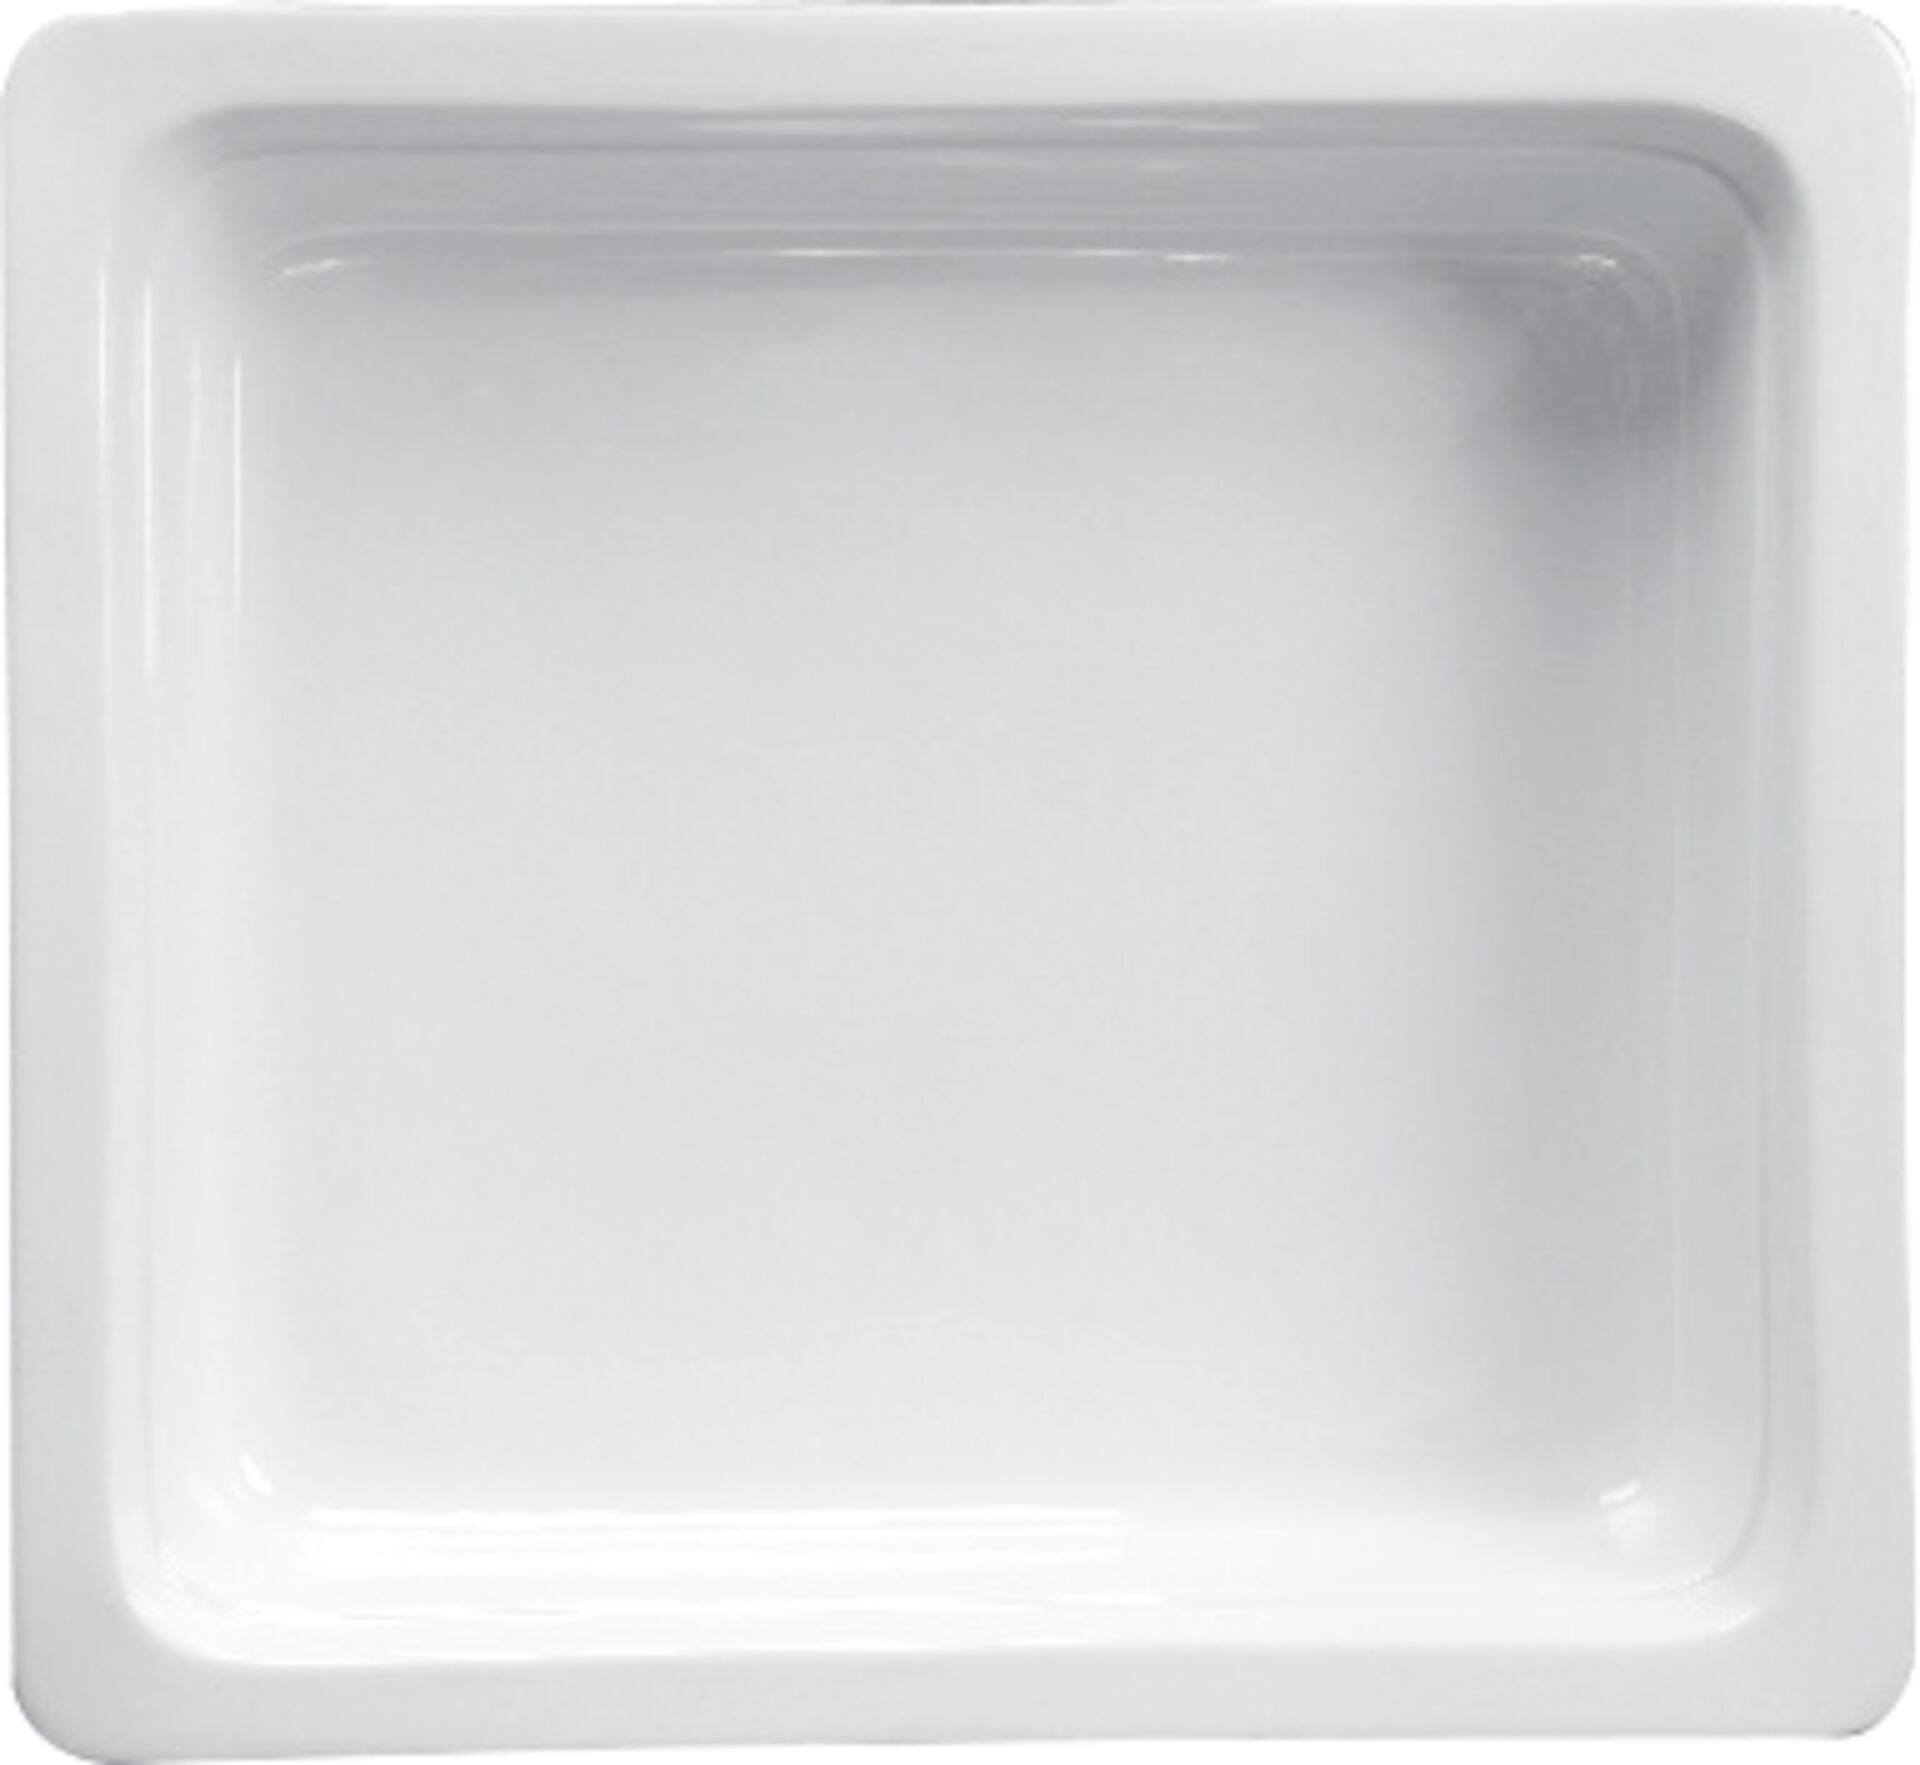 GN-Behälter Porzellan 2/3 65mm tief